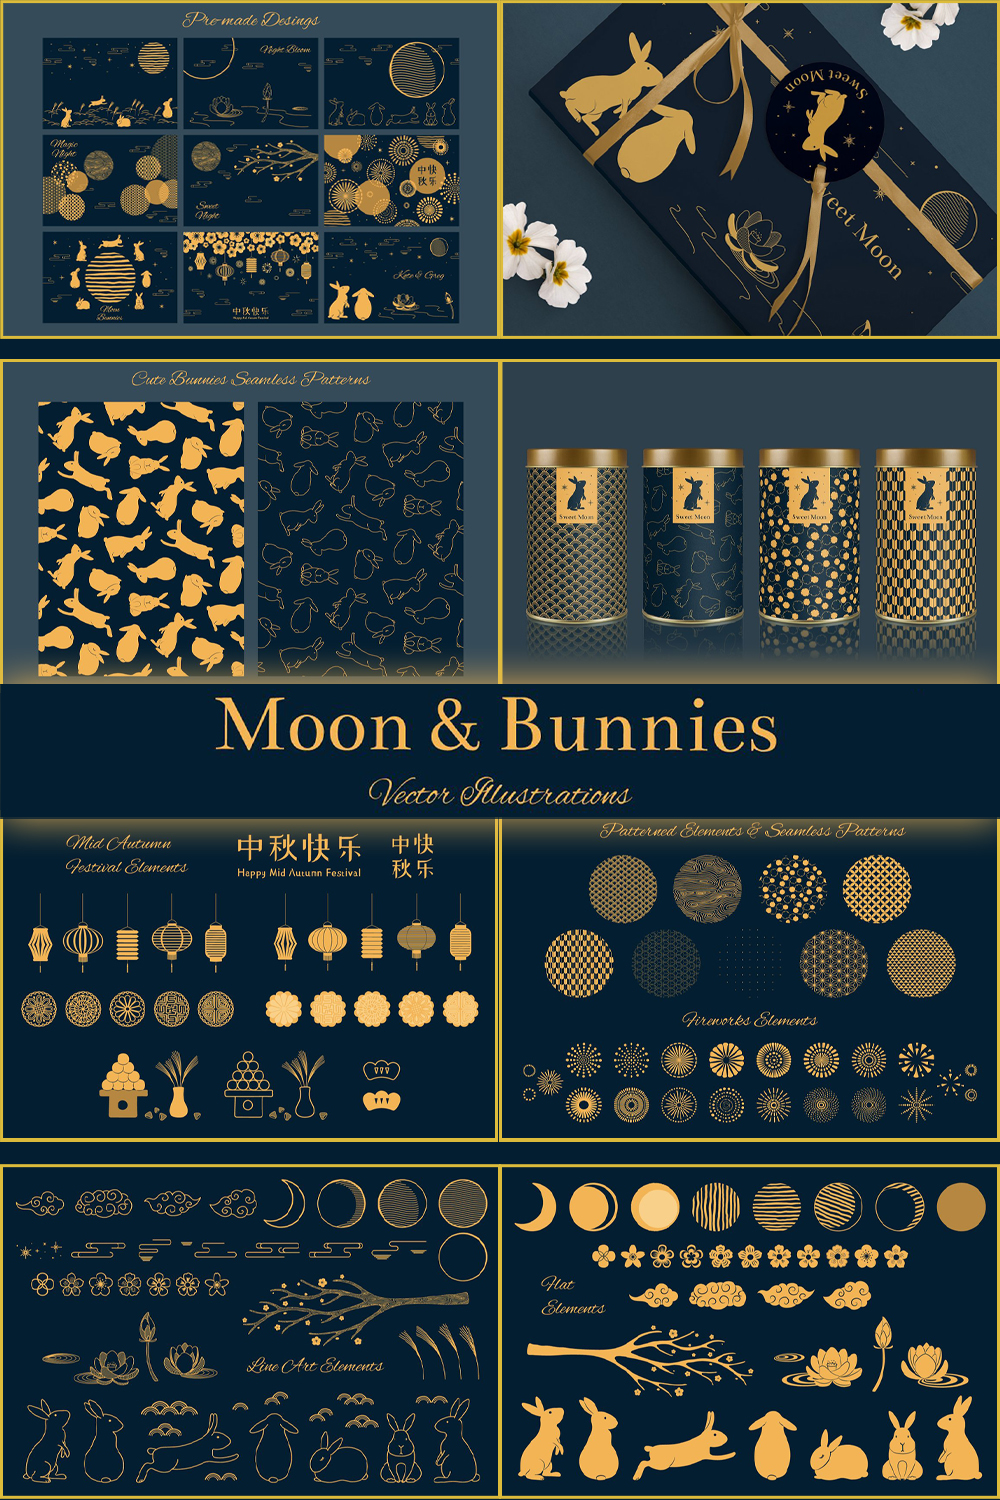 Moon bunnies vector illustrations of pinterest pinterest.